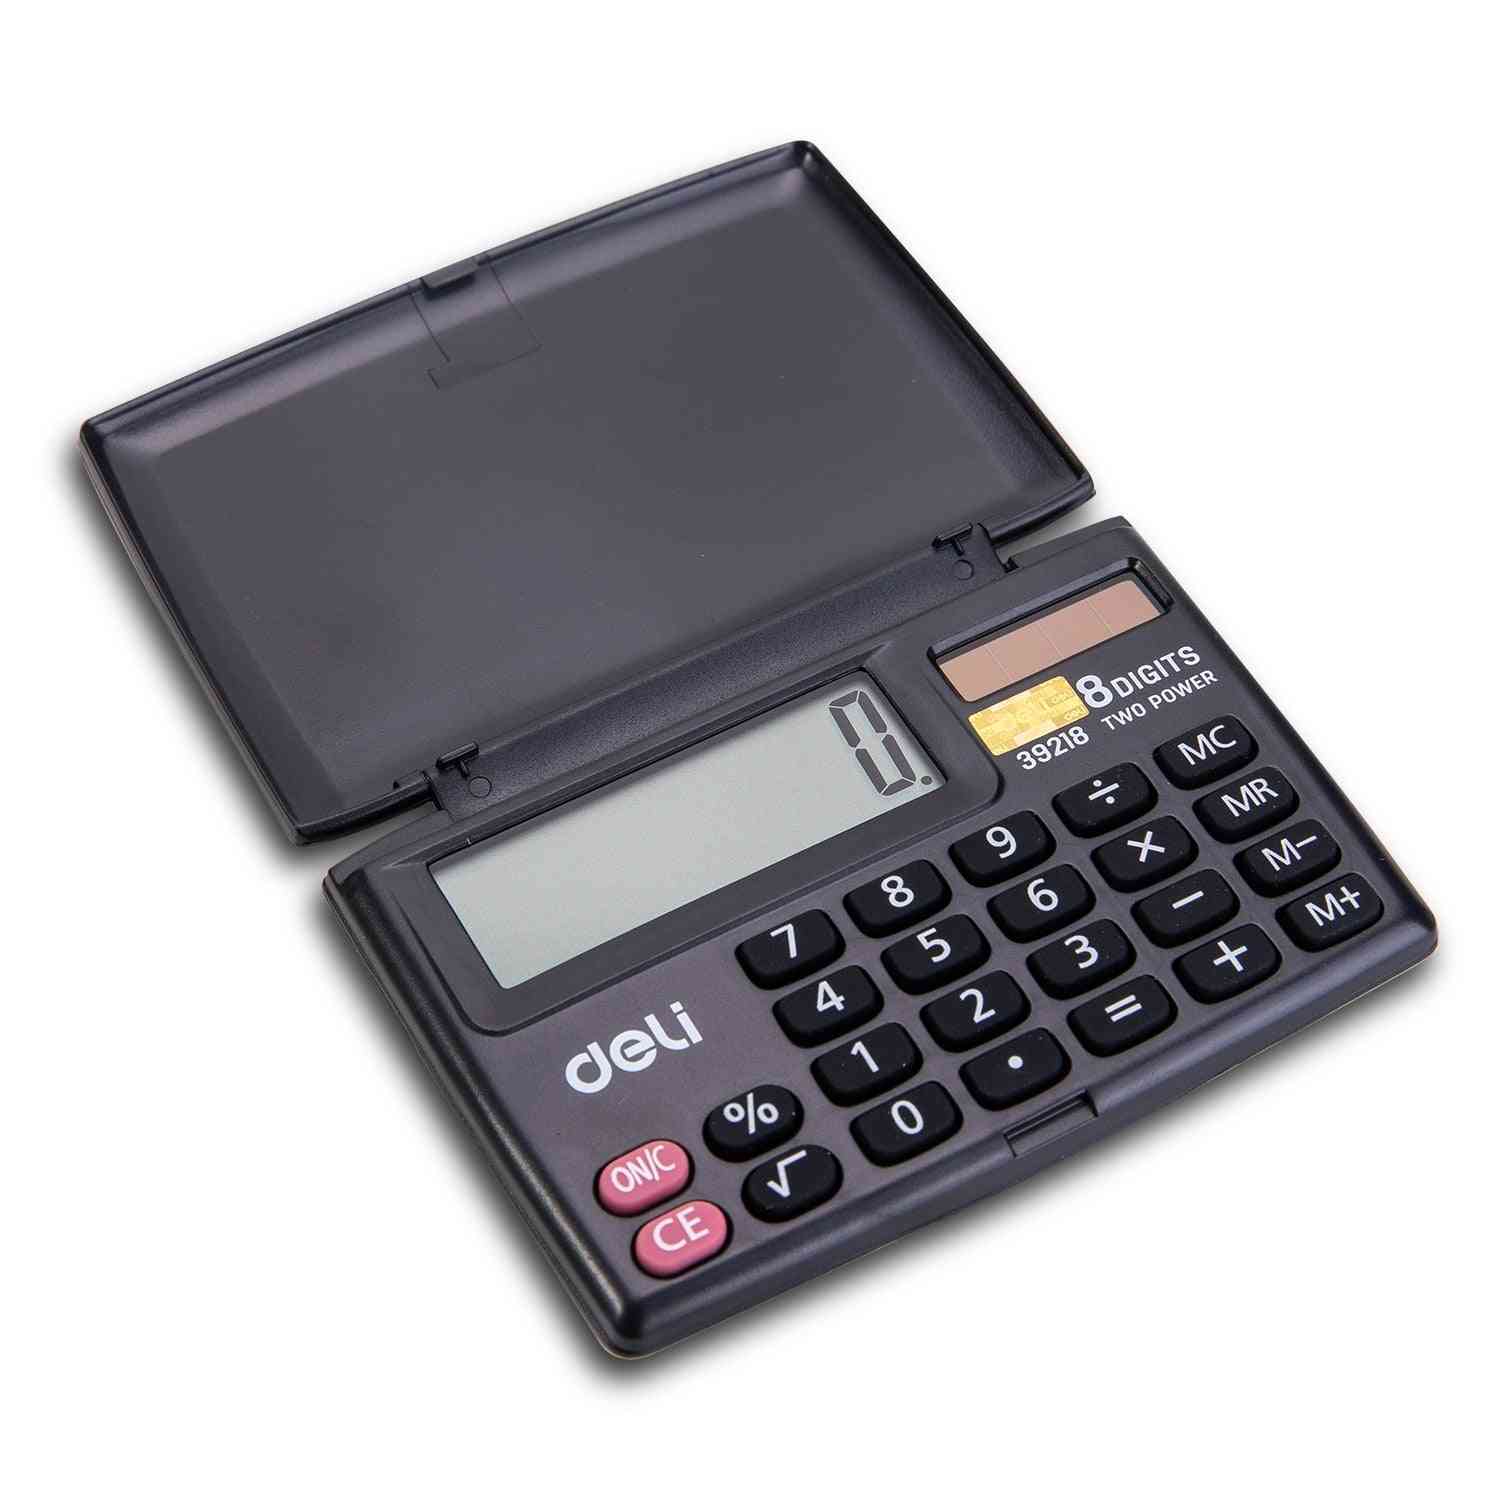 Portable Pocket Lcd Display Screen Mini Calculator